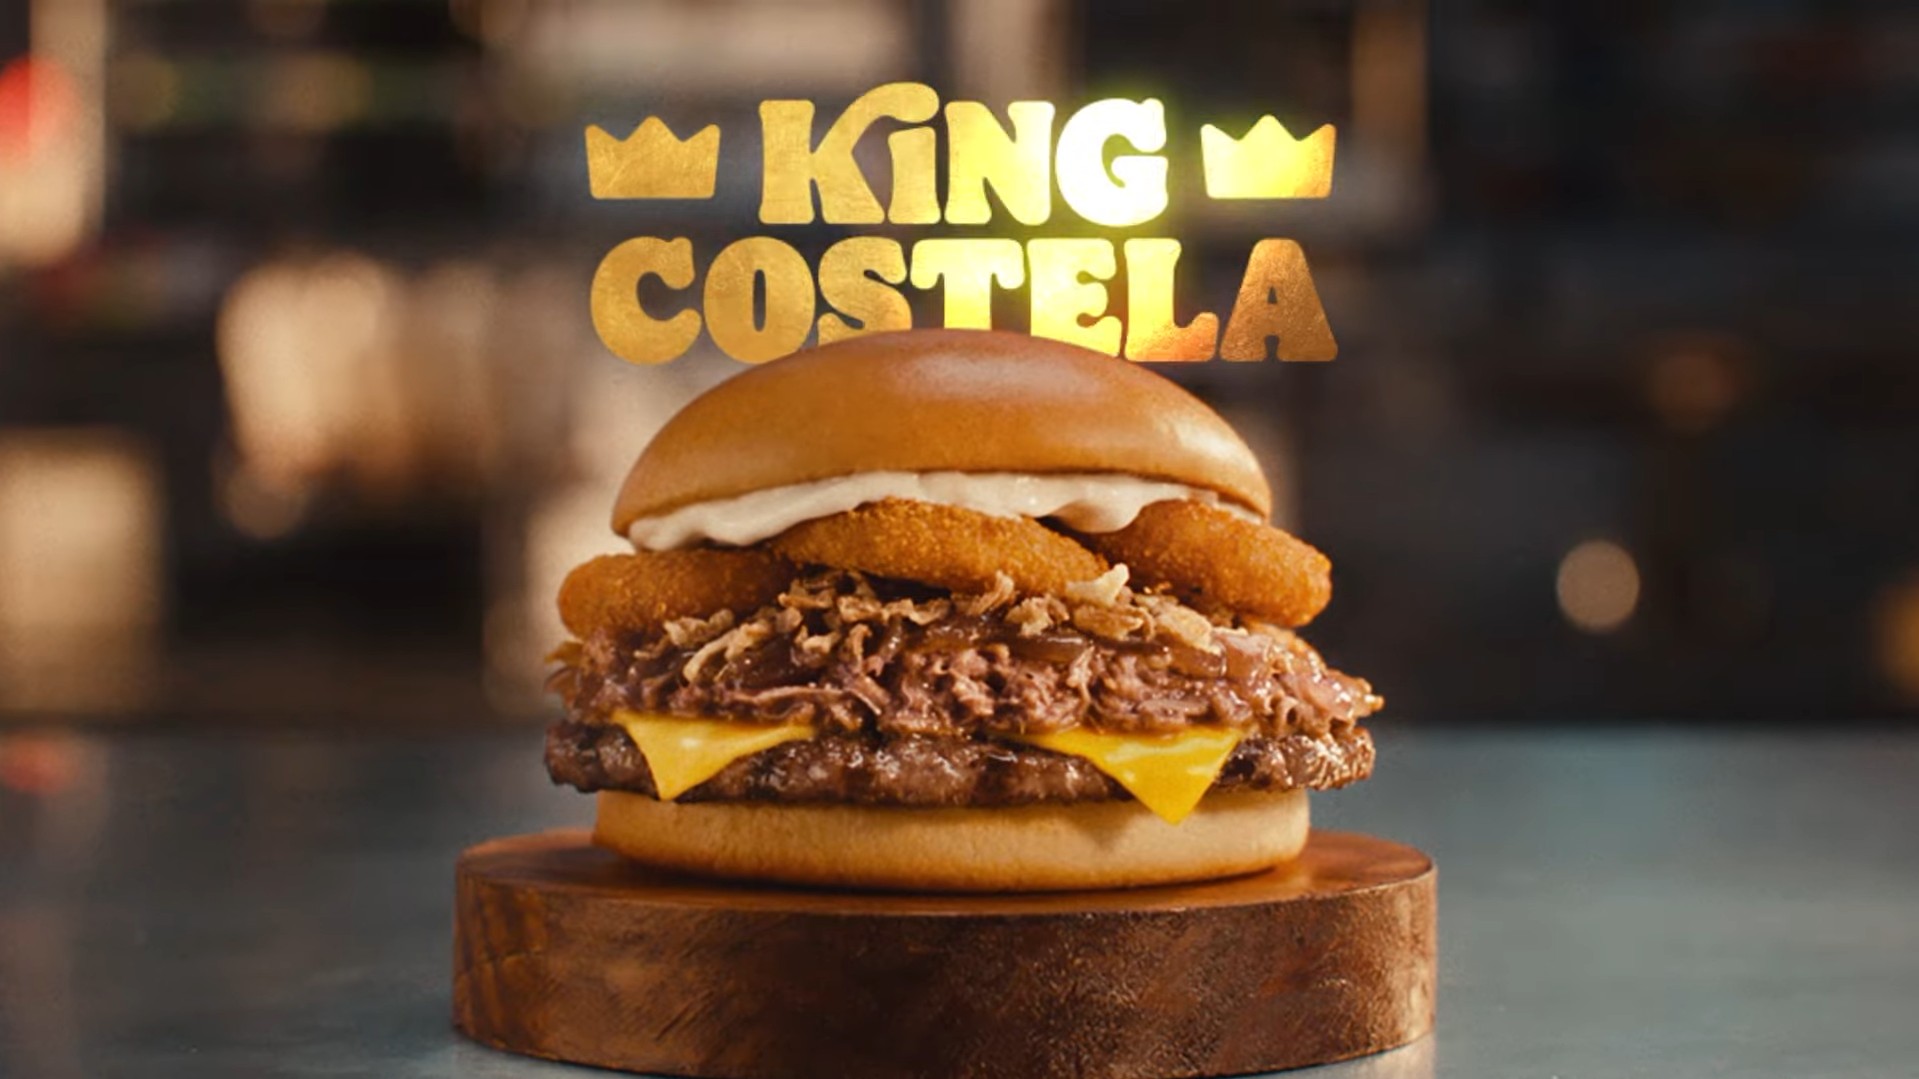 Dois anos após ser acusado de propaganda enganosa, Burger King anuncia hambúrguer com costela e agradece Procon-SP